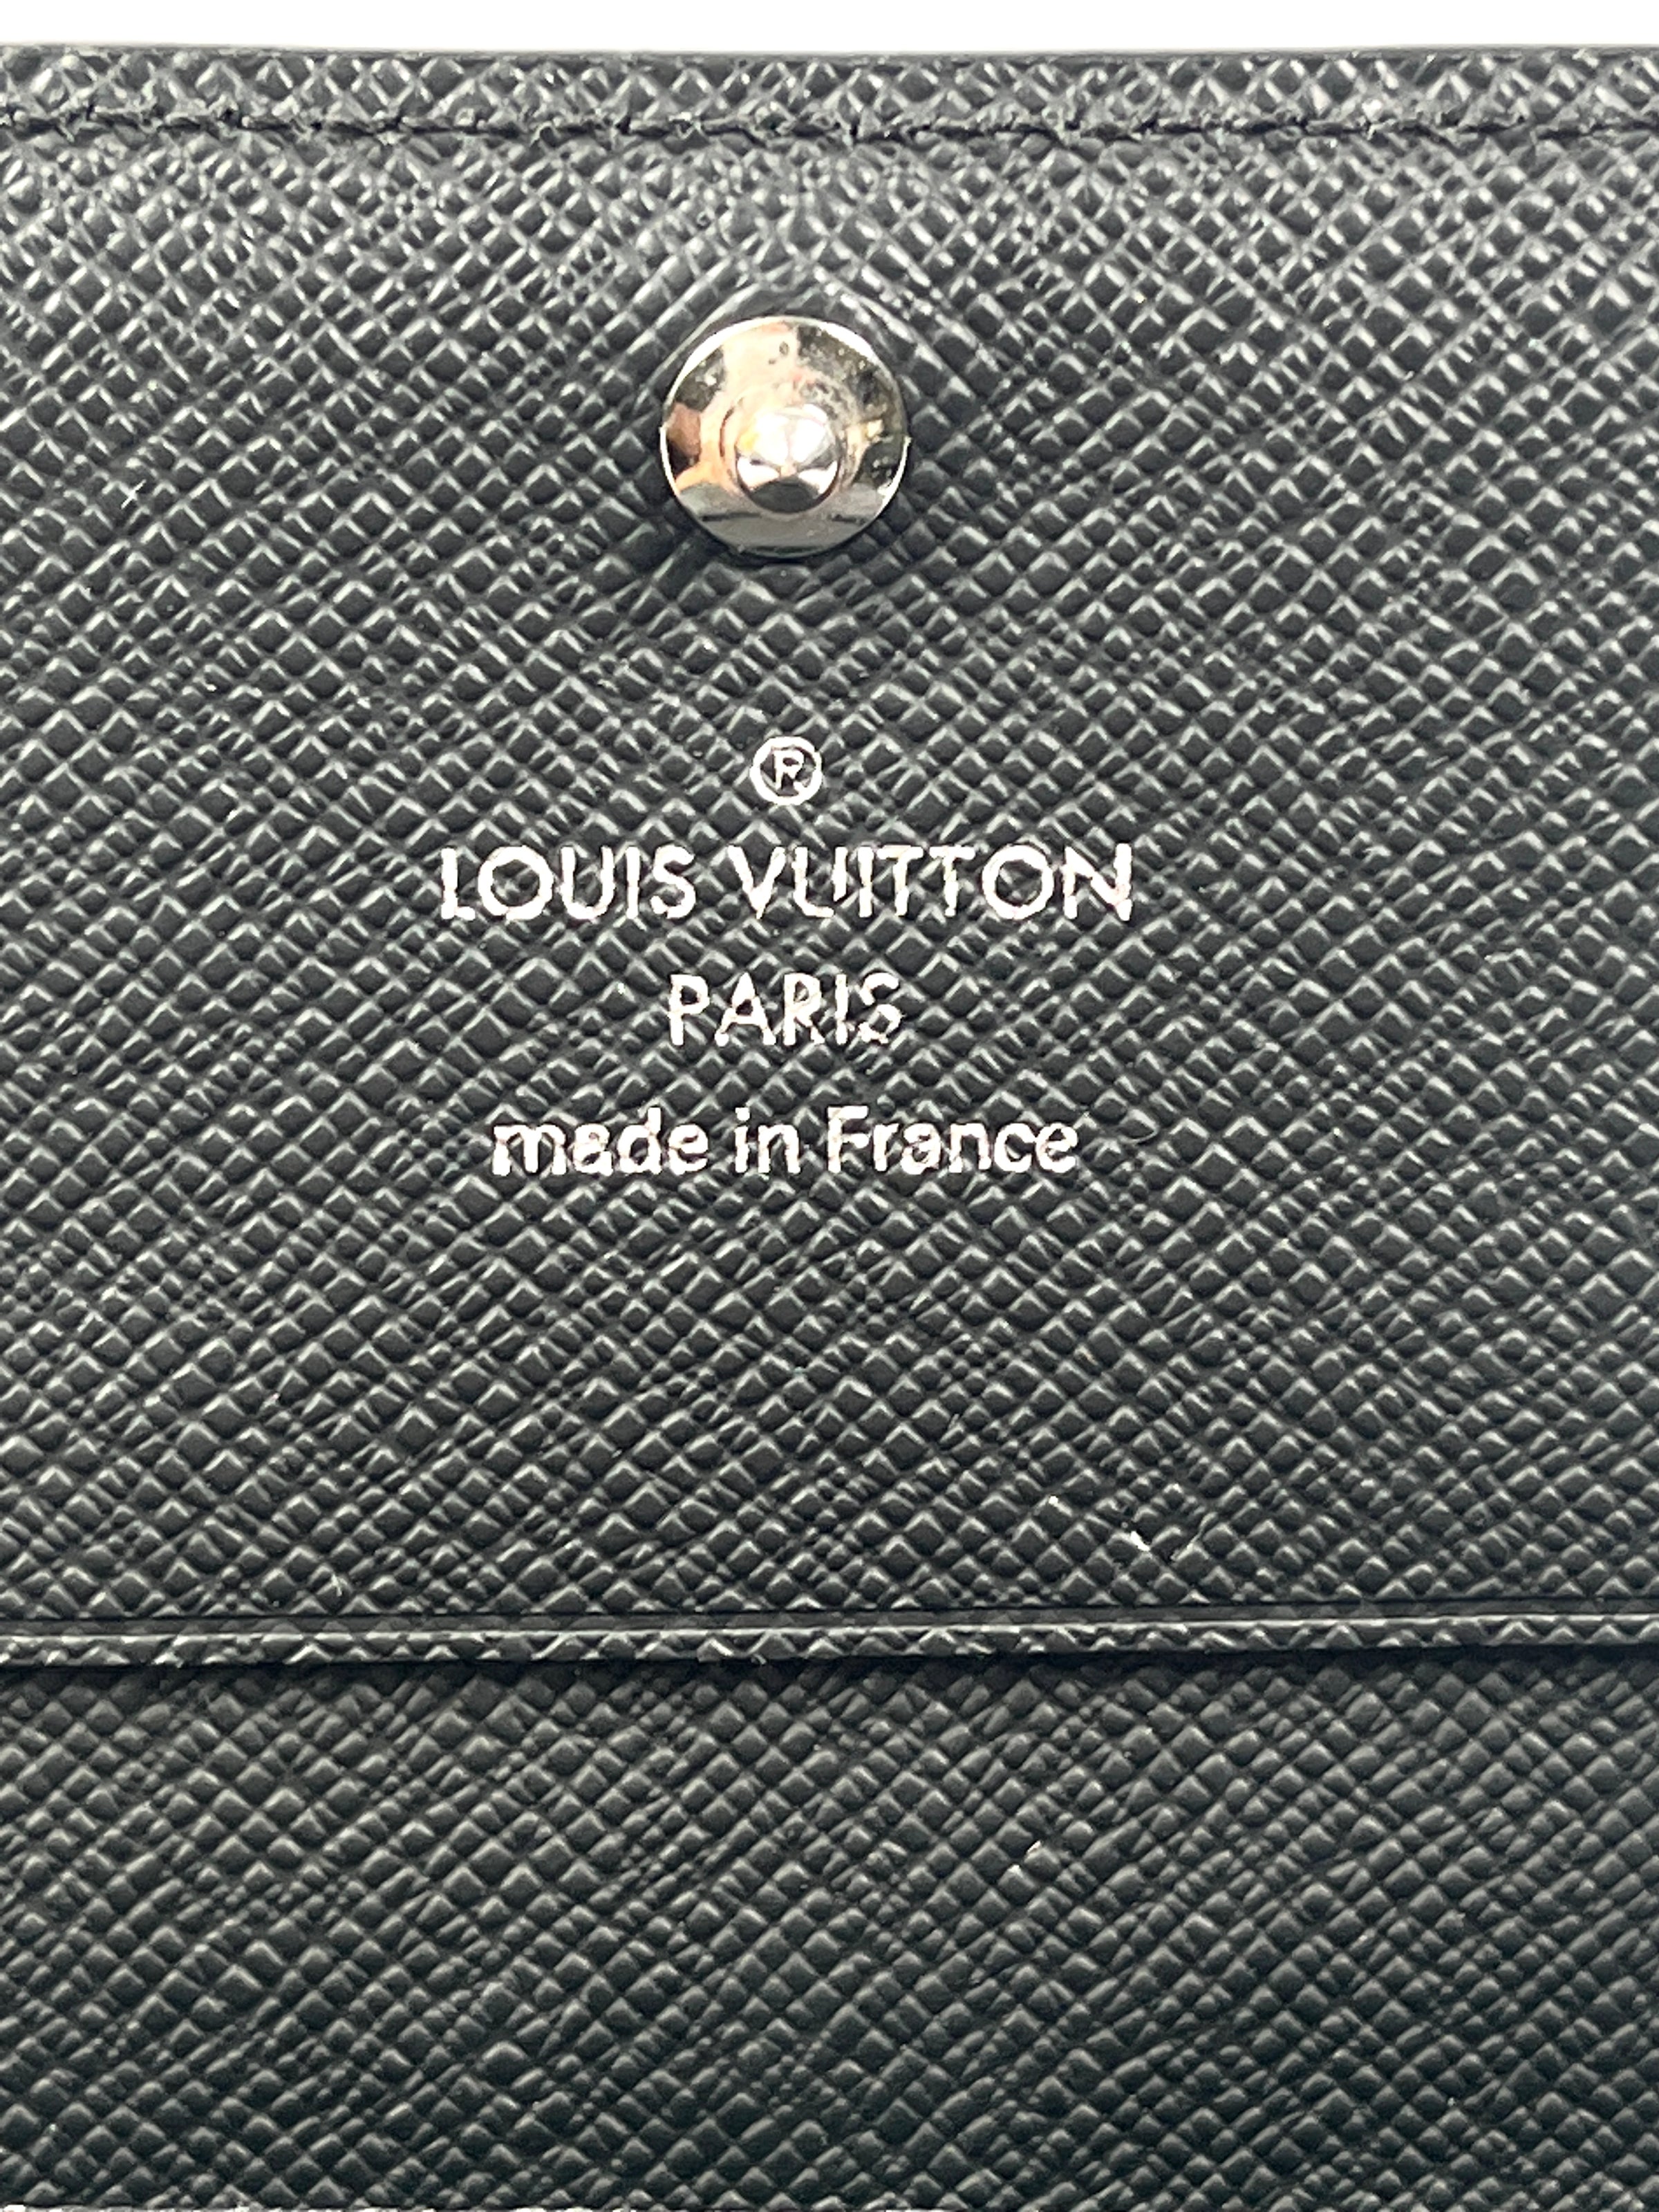 Louis Vuitton Enveloppe Carte De Visite Damier Graphite in Canvas